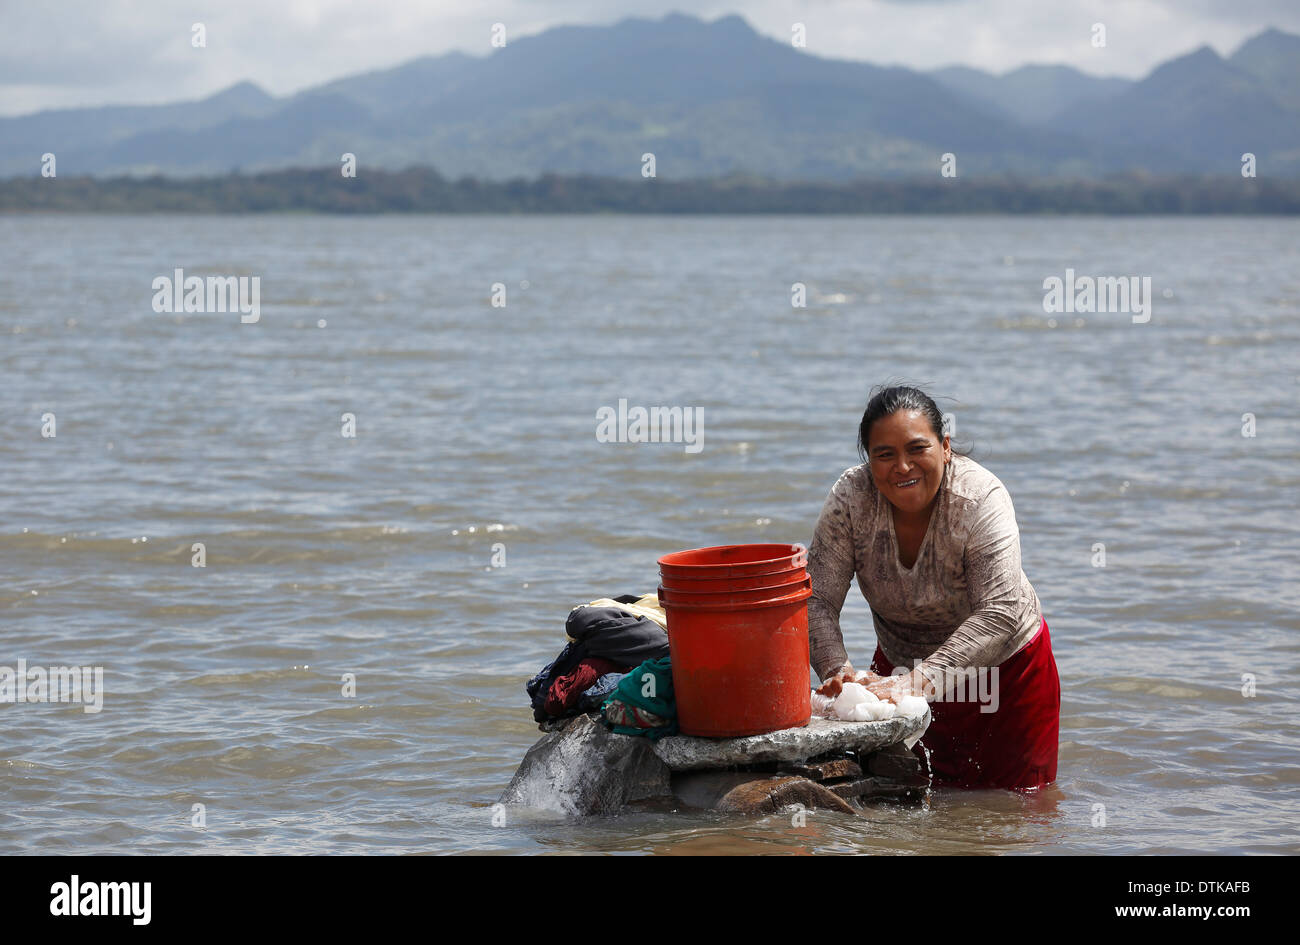 Woman hand washing laundry, Lago de Apanas, Nicaragua Stock Photo